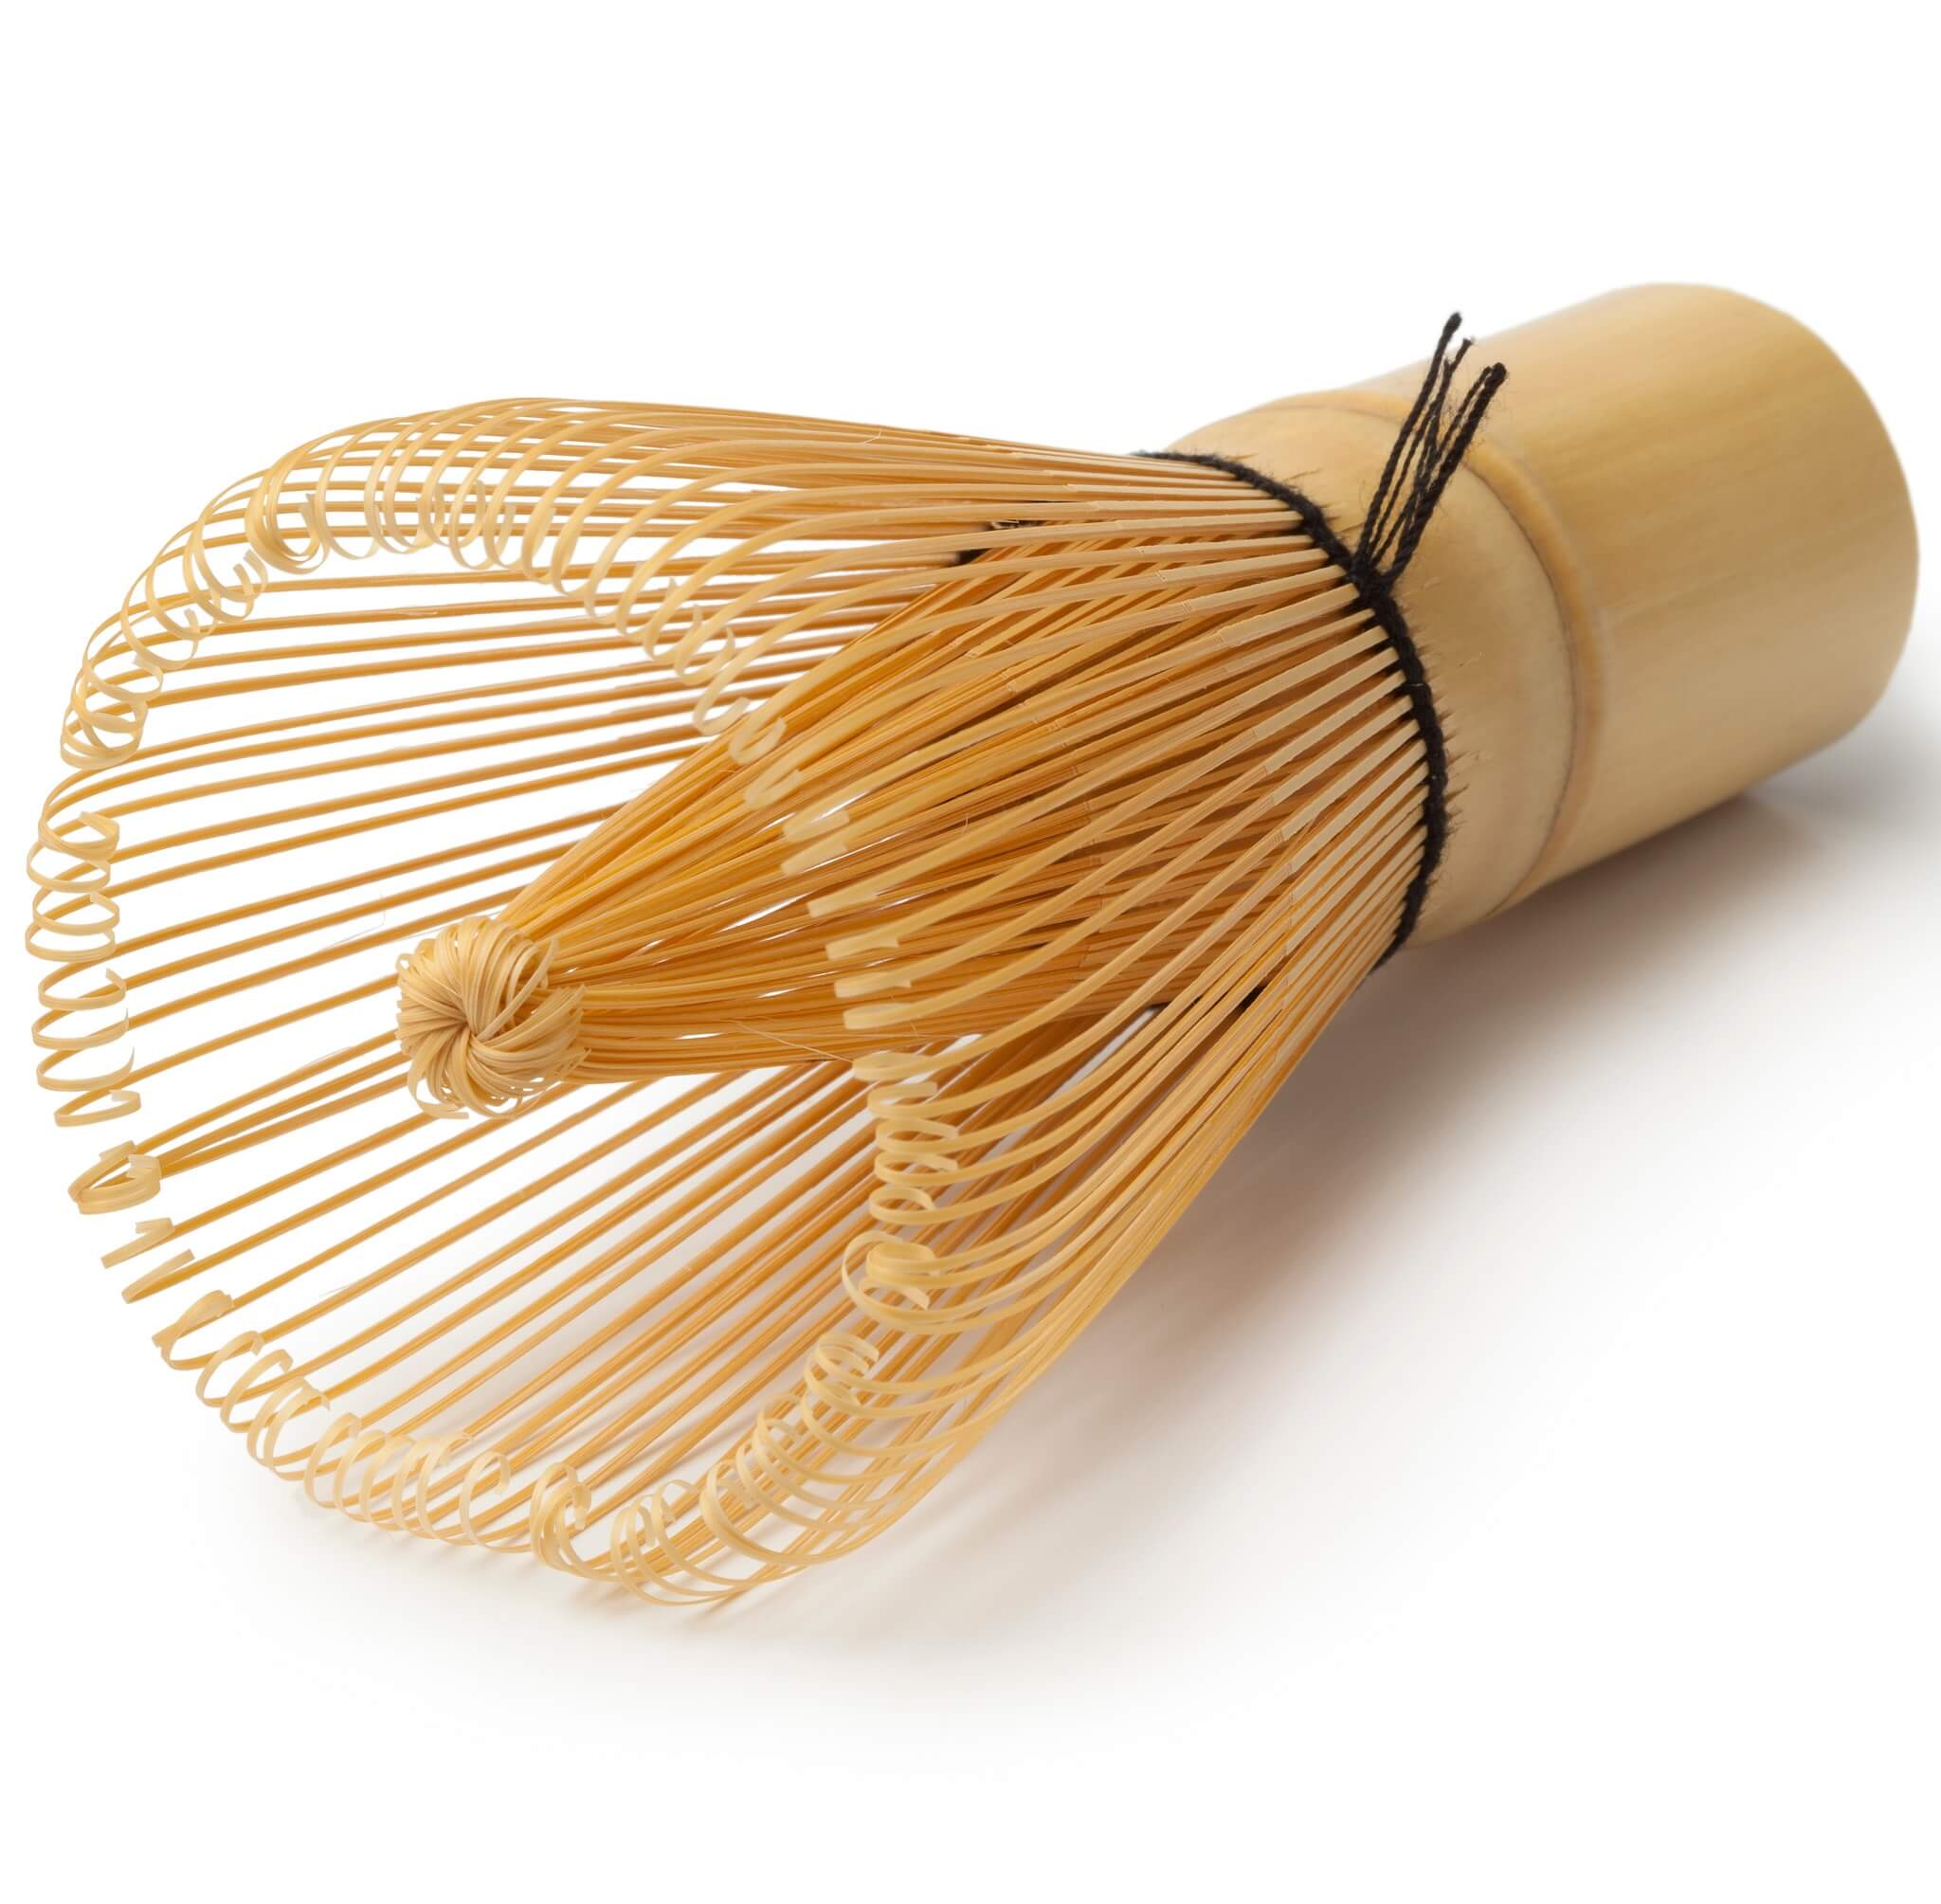 Matcha broom "Chasen" made of white bamboo